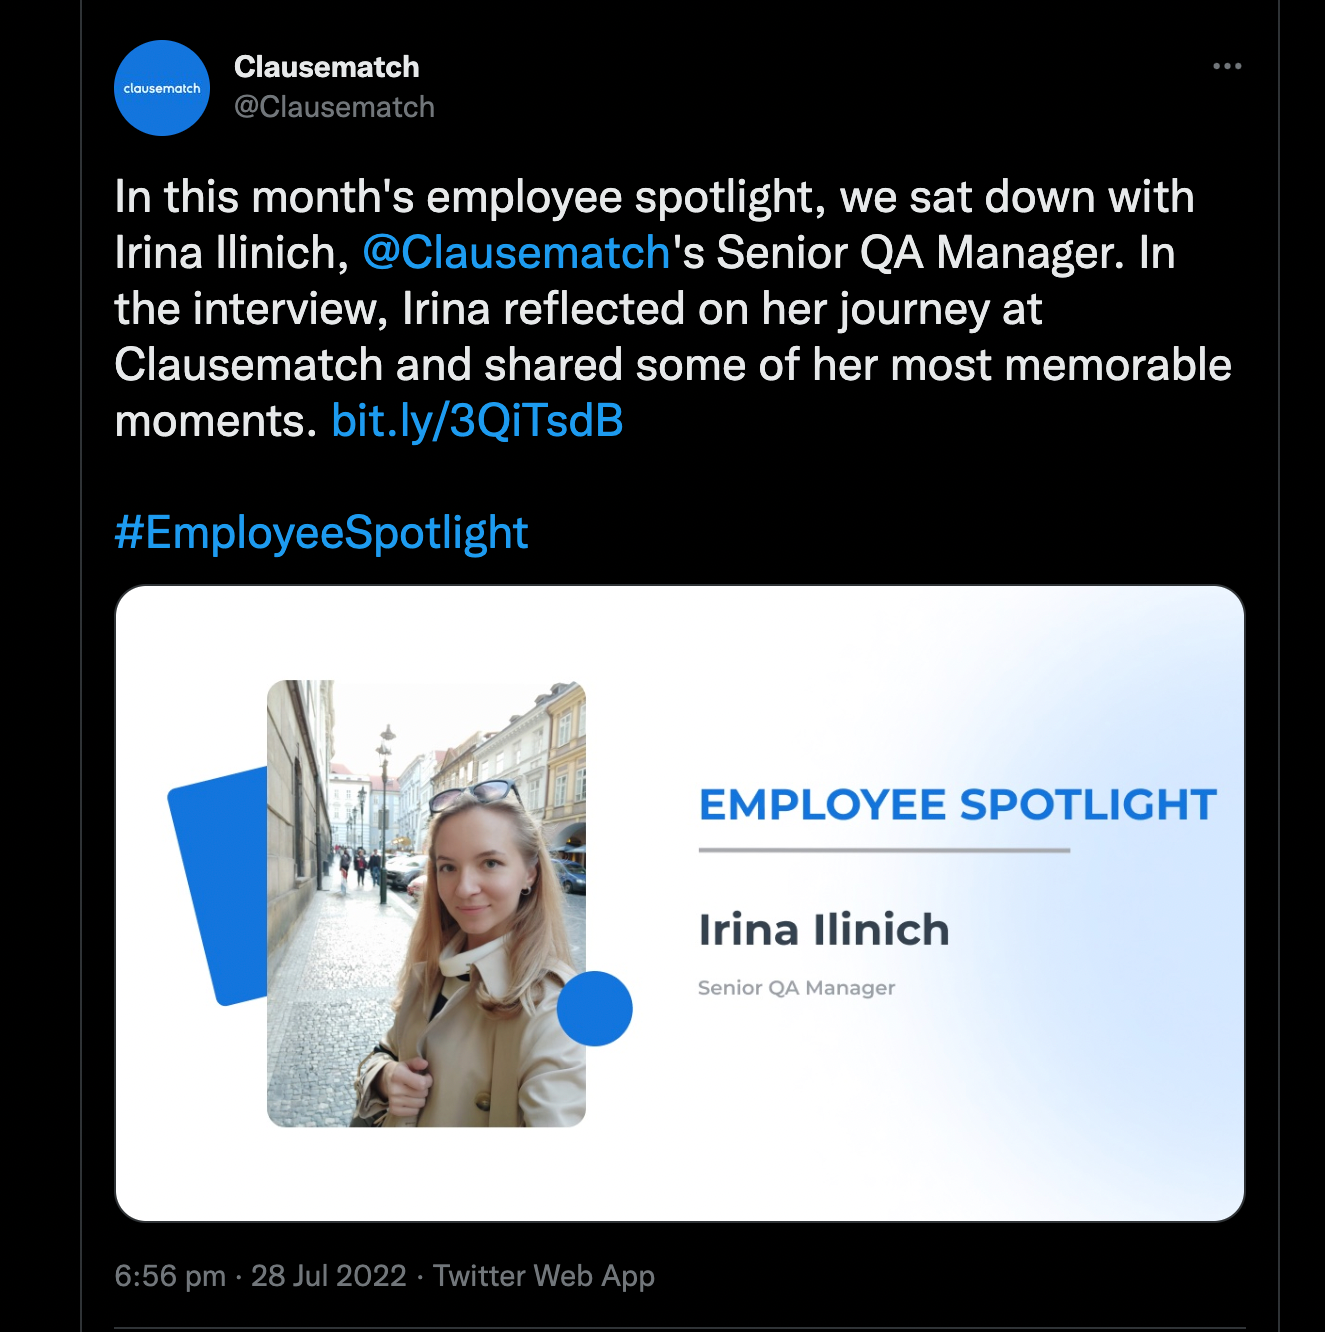 employee-spotlight-clausematch